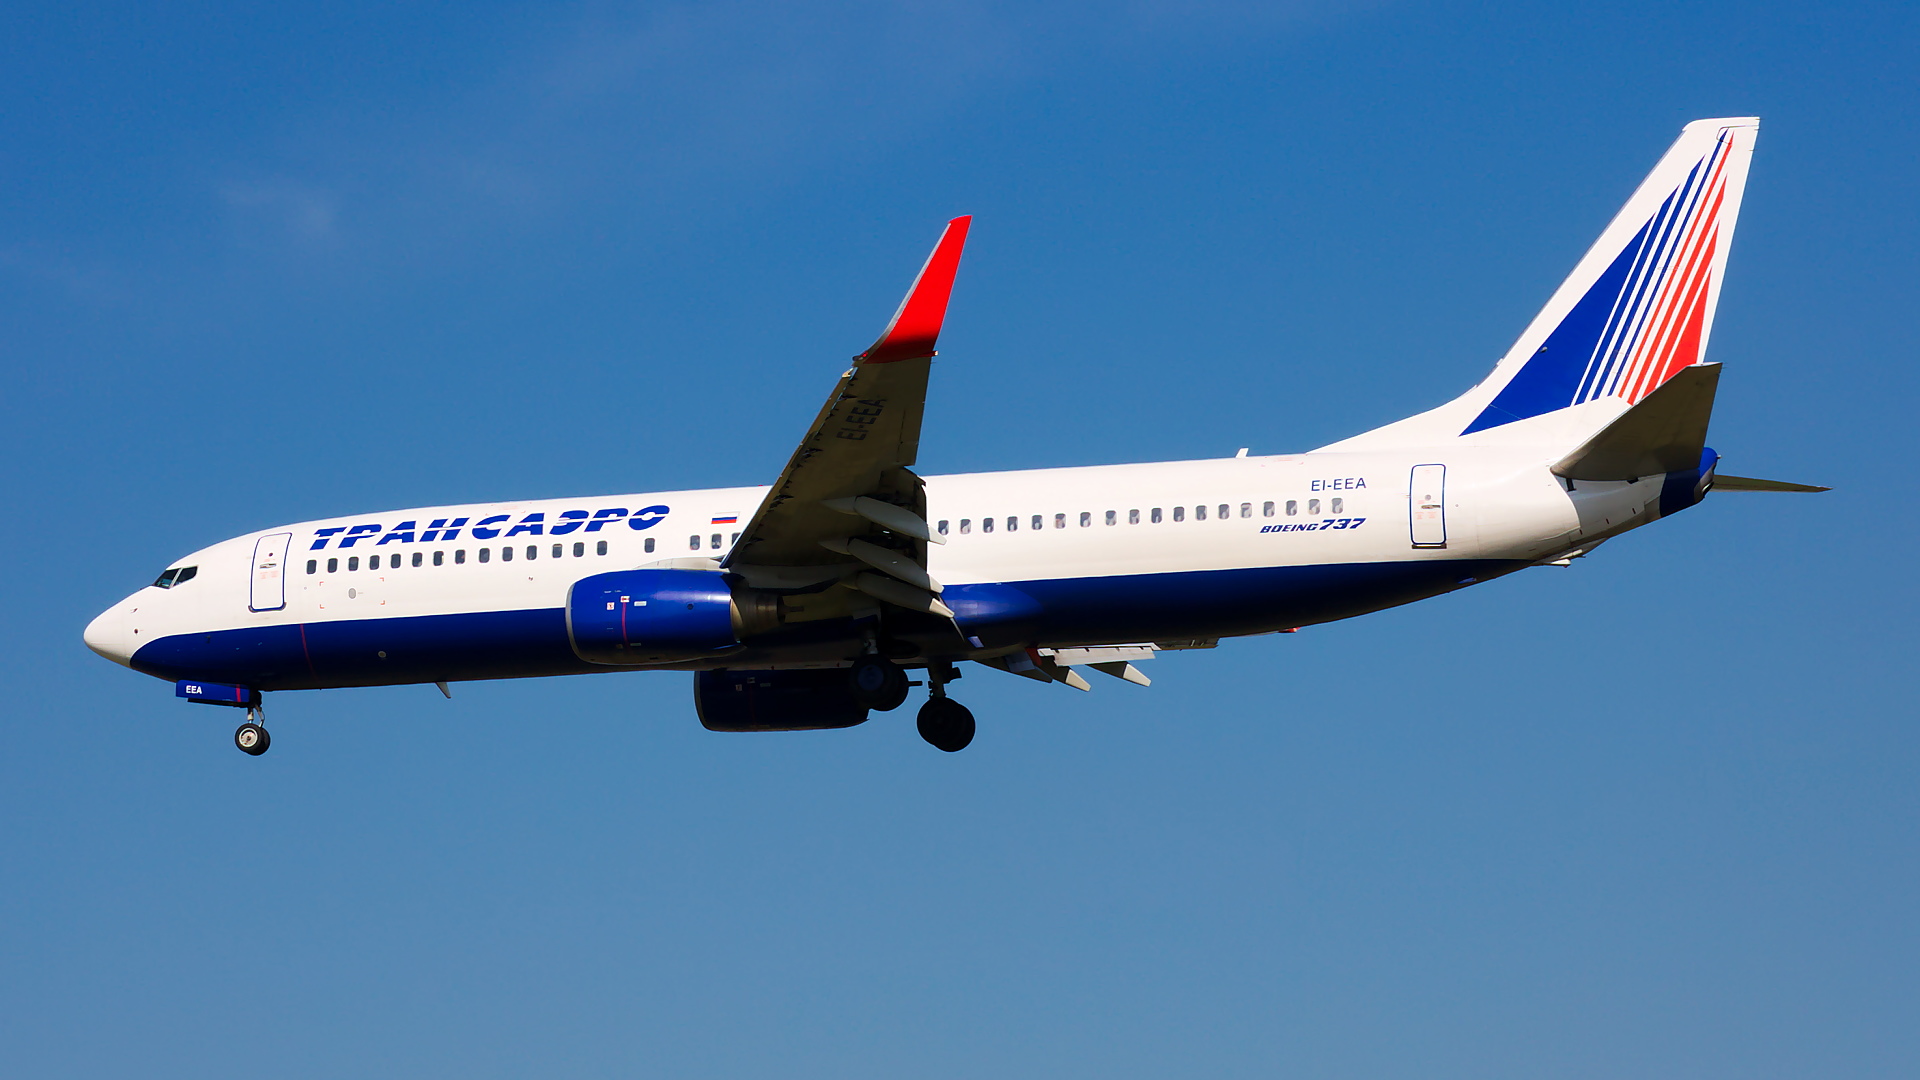 EI-EEA ✈ Transaero Airlines Boeing 737-8K5 @ London-Heathrow